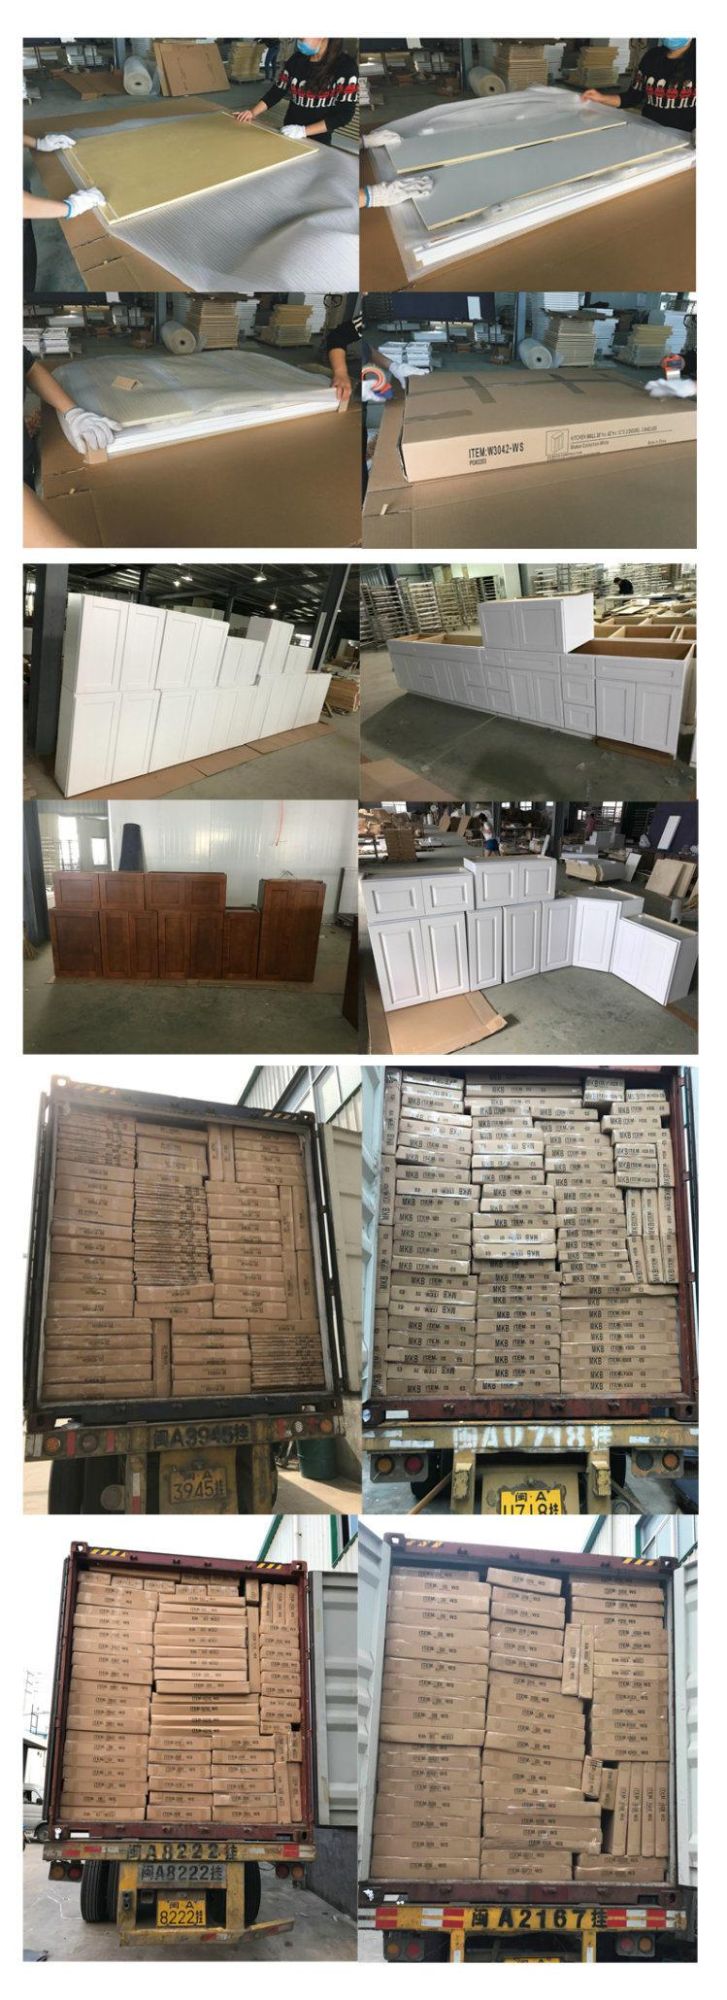 Cupboards Solid Wood Kitchen Furniture Kitchen Cabinet (Birch Stained)